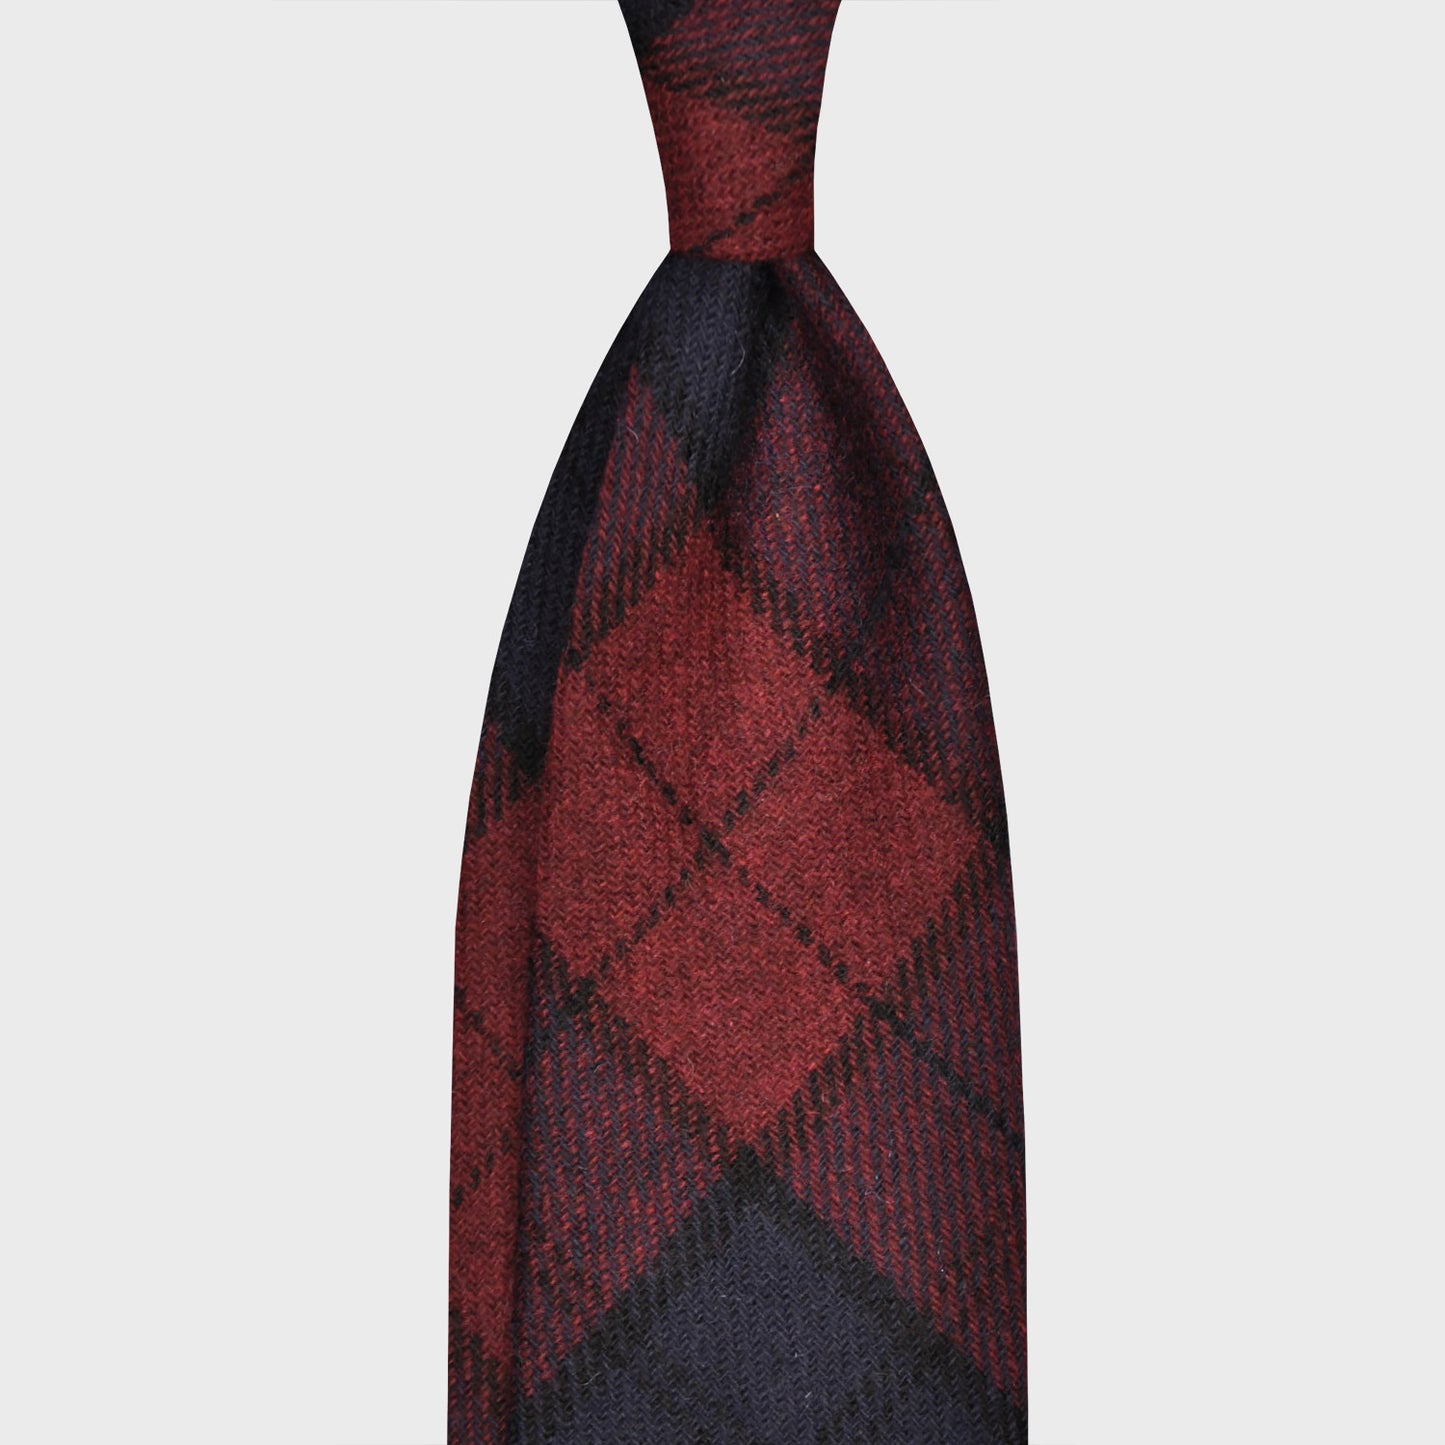 F.Marino Tweed Tie 3 Folds Black Watch Tartan Red-Wools Boutique Uomo